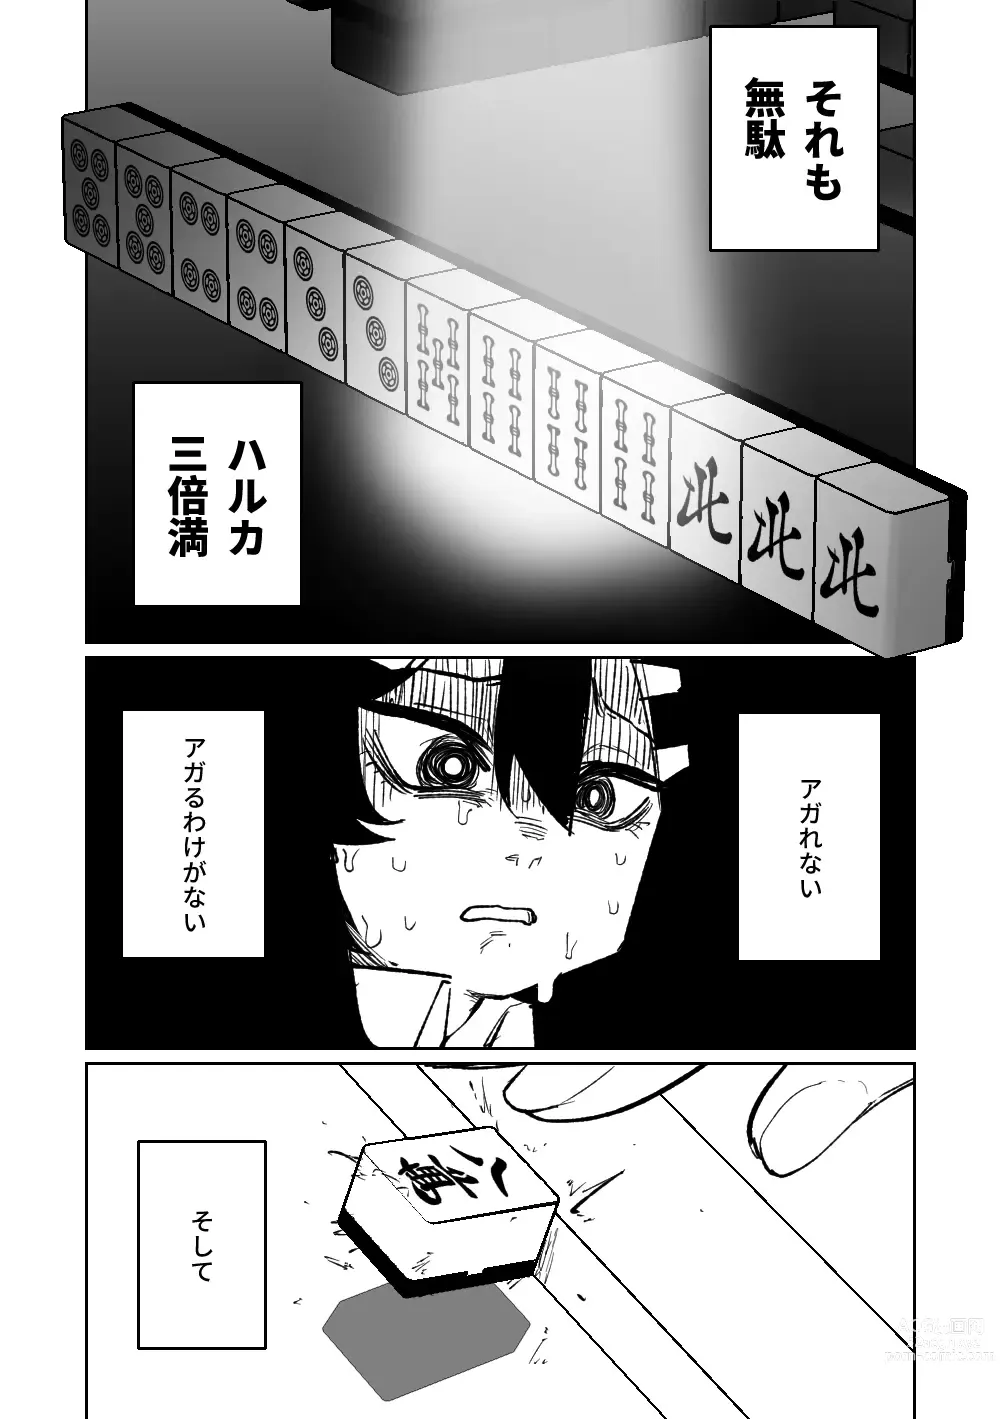 Page 183 of doujinshi Benriya 68 Datsui Mahjong Ichi ~Sankaisen~